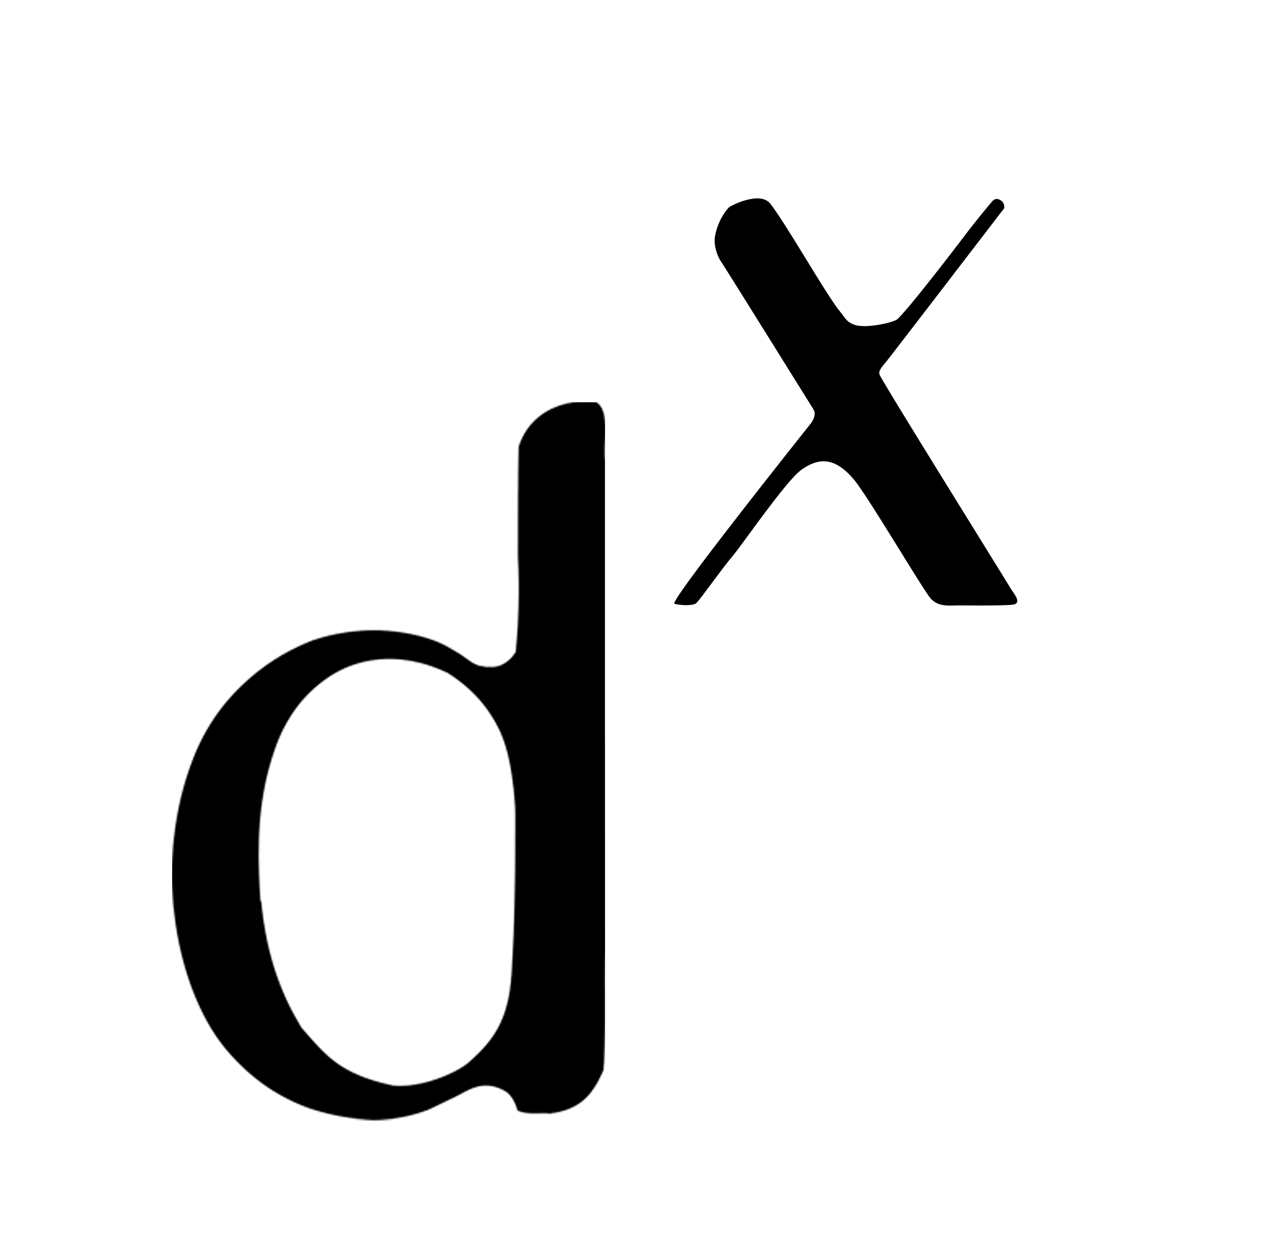 Depix logo